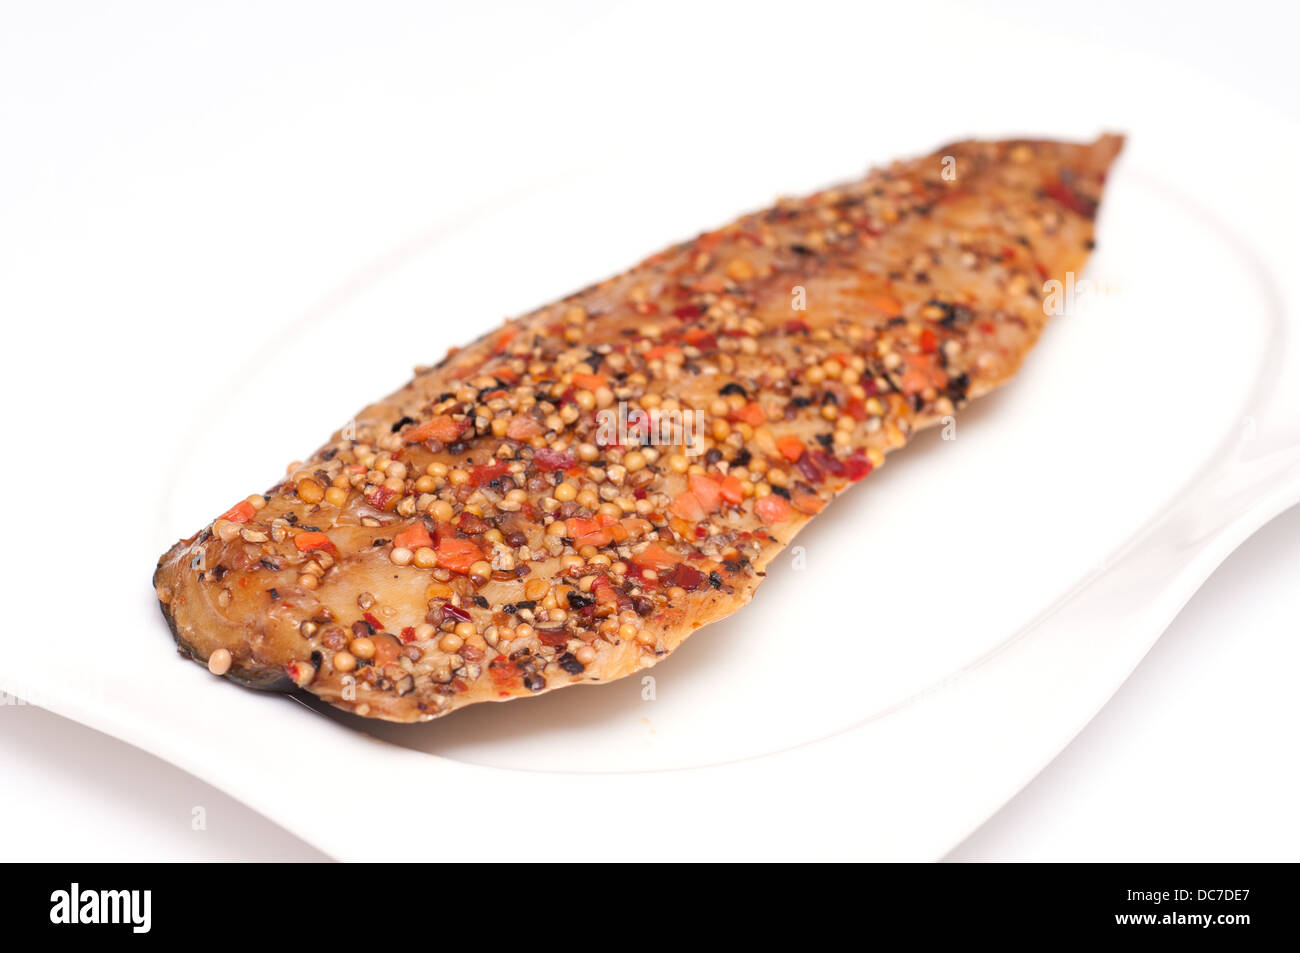 Smoked mackerel with peppercorns and mustard seeds Stock Photo